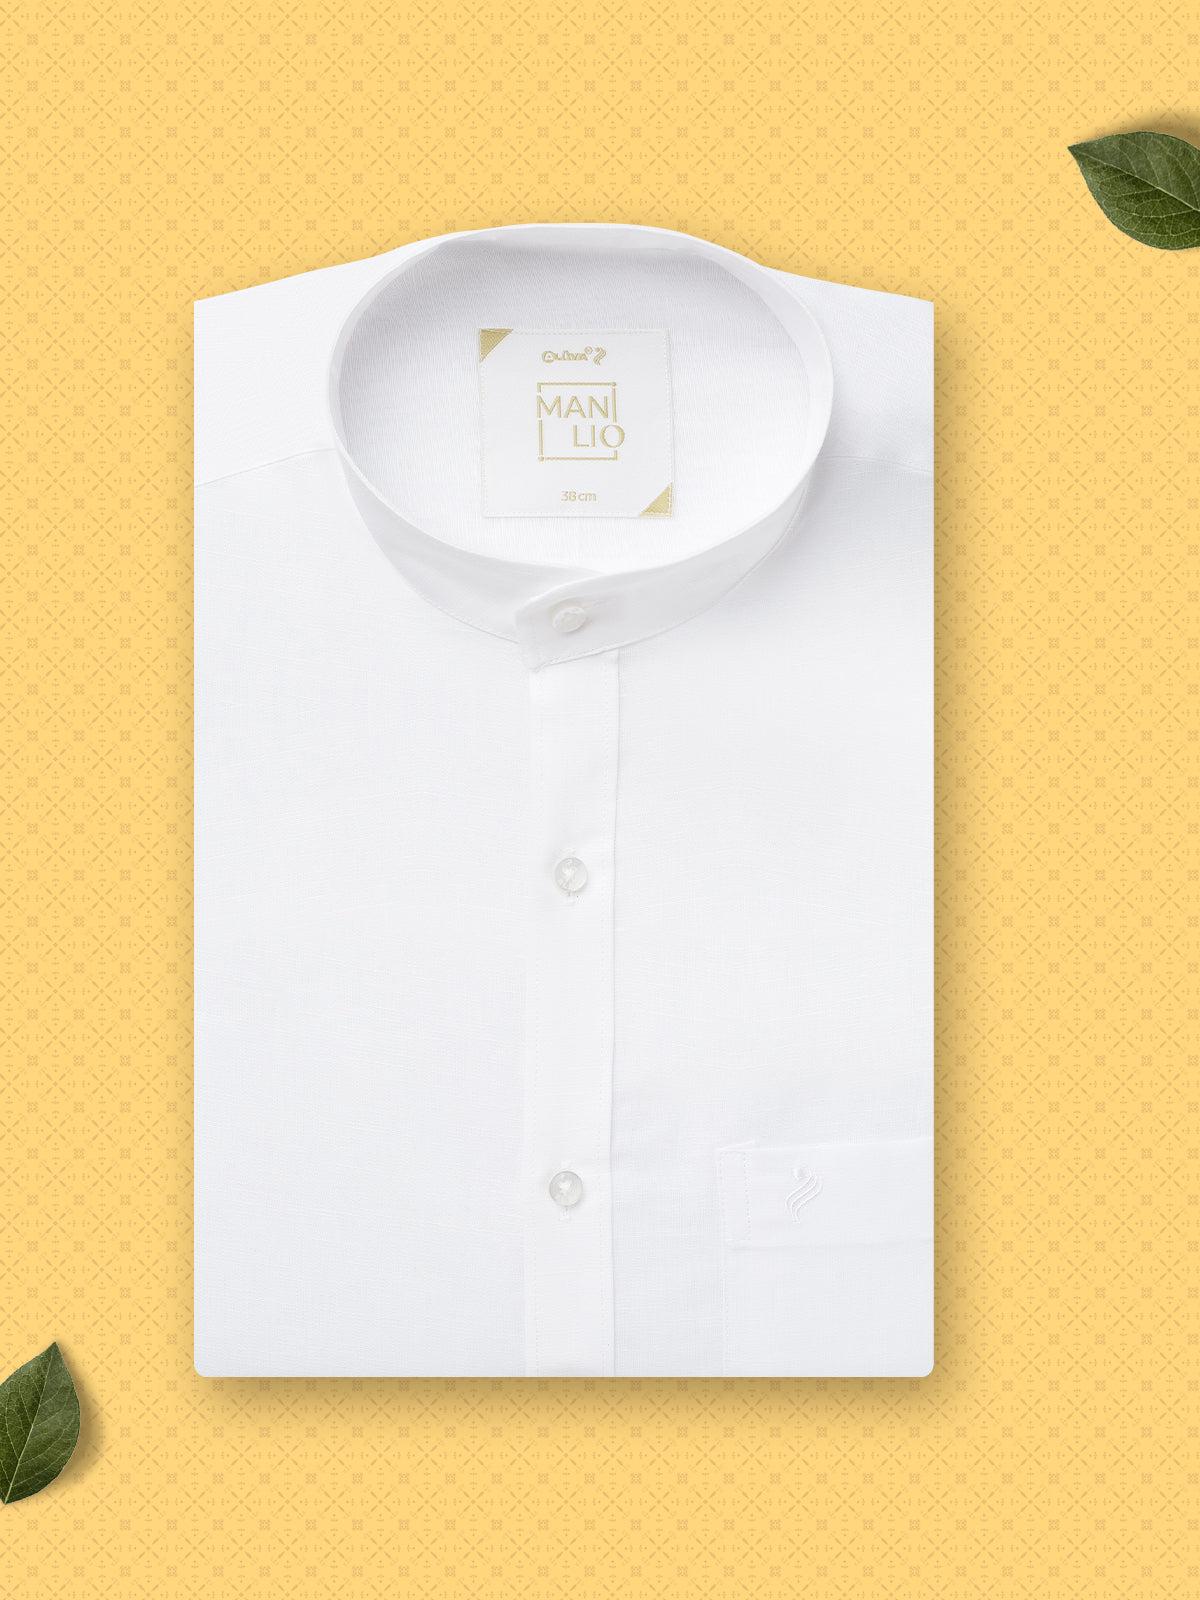 Linen Plus White shirtsAlayacotton_Manlio Chinese Collar Linen Cotton Shirt